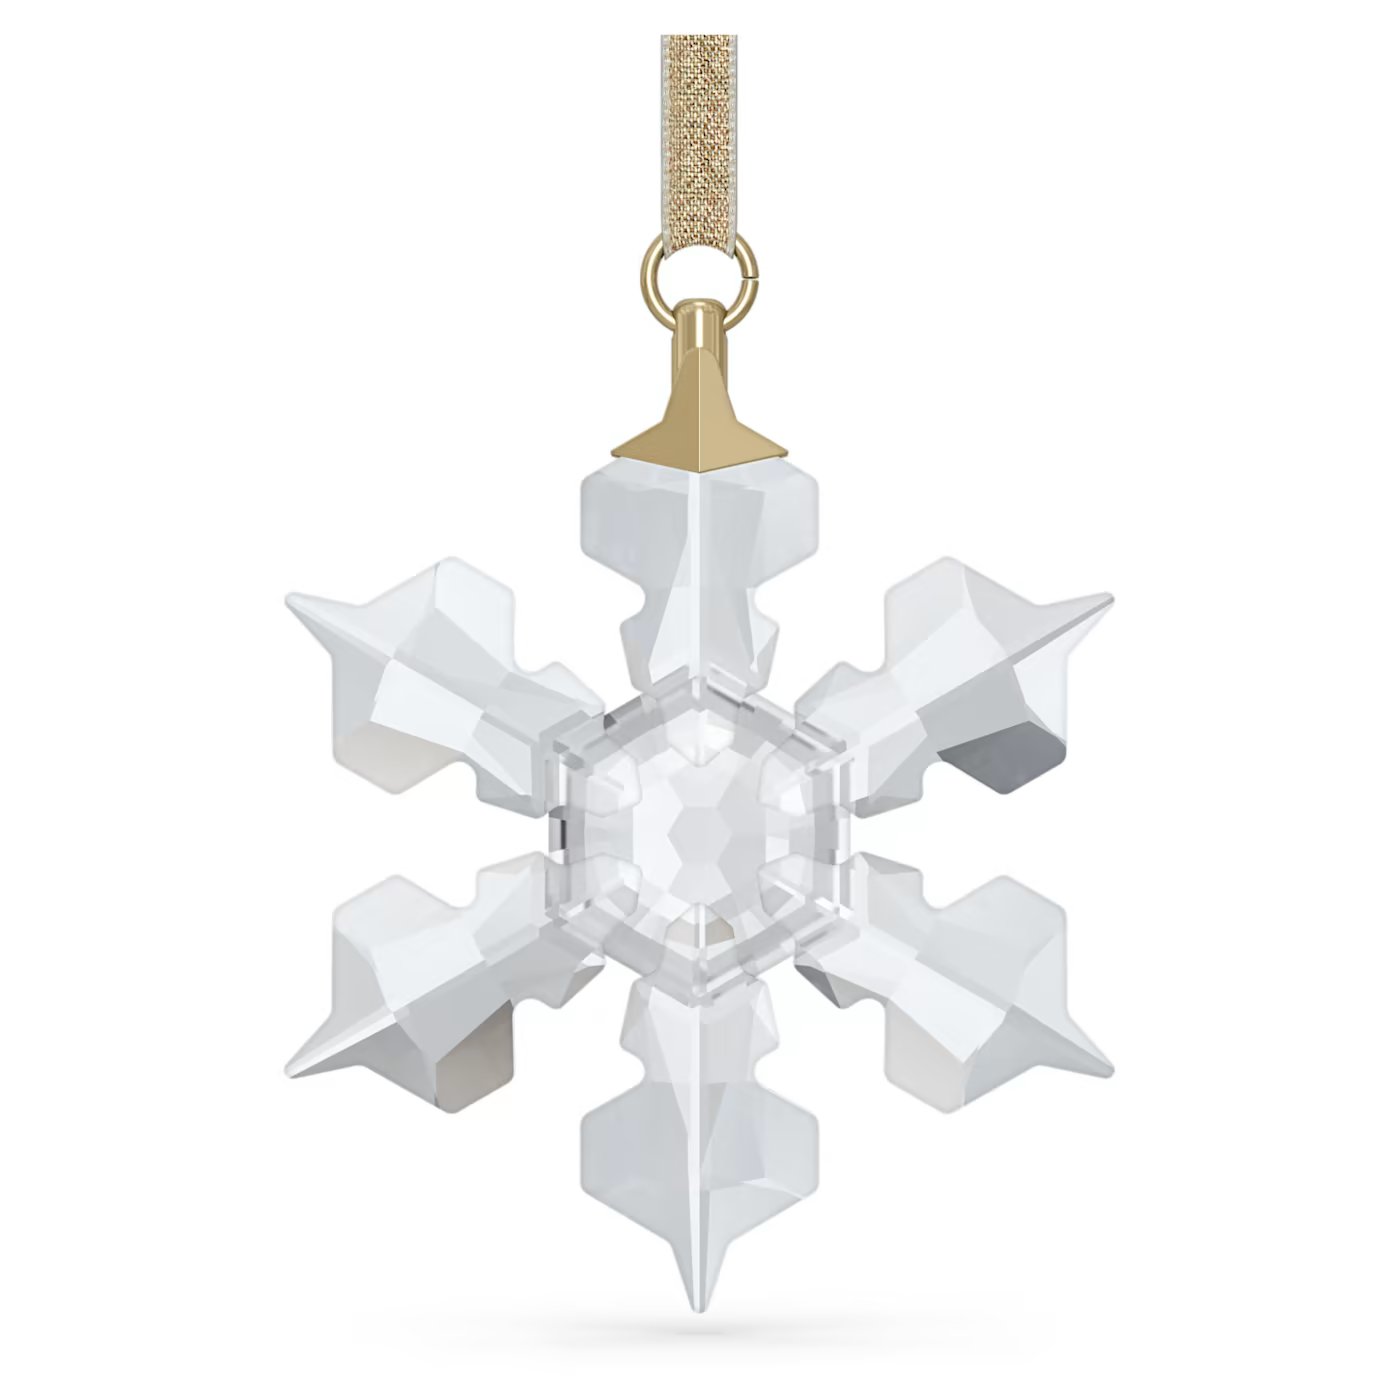 62d86fdd25eab_px-little-snowflake-ornament-swarovski-5621017.jpg